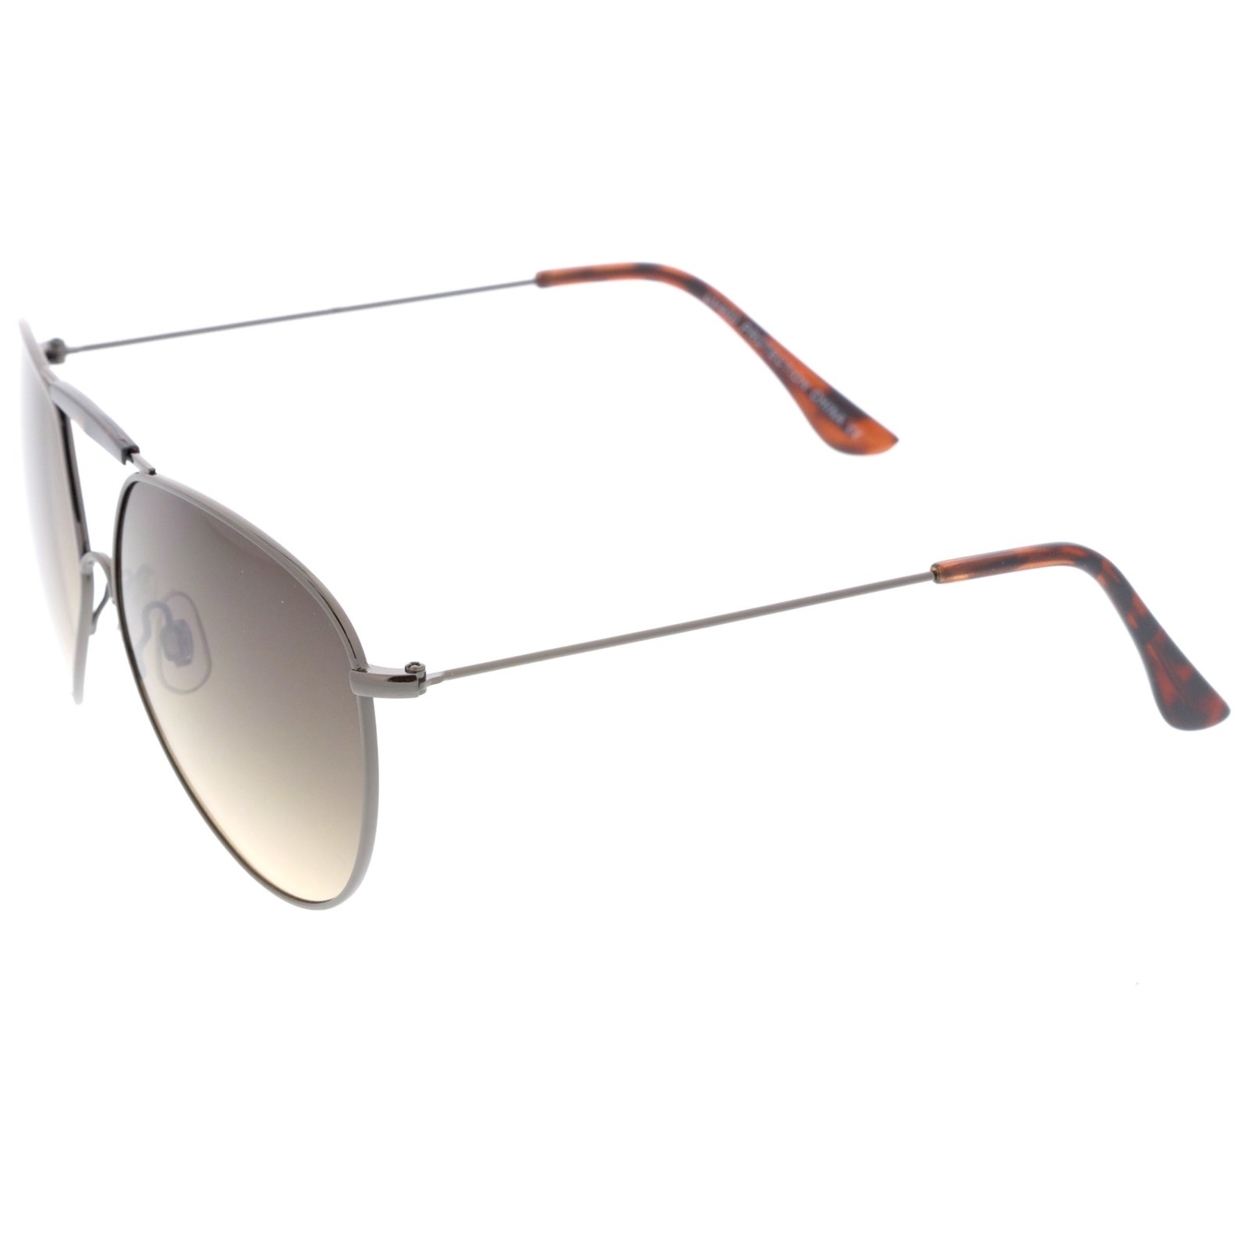 Casual Brow Bar Detail Slim Temple Metal Frame Aviator Sunglasses 62mm - Silver-Black / Lavender